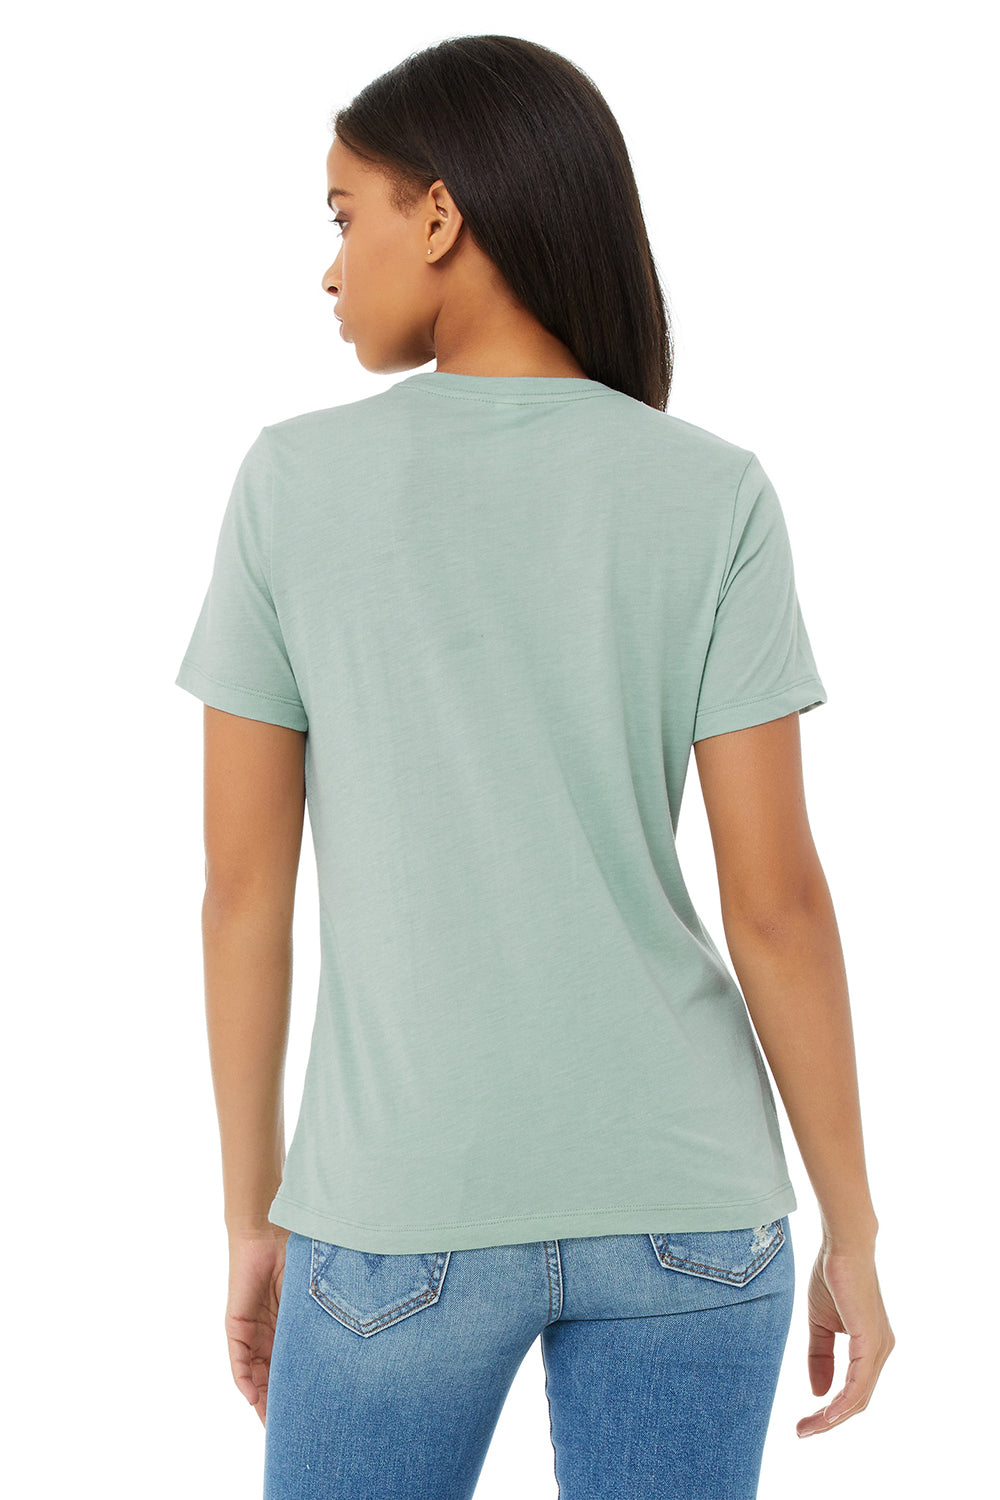 Bella + Canvas BC6413 Womens Short Sleeve Crewneck T-Shirt Dusty Blue Model Back